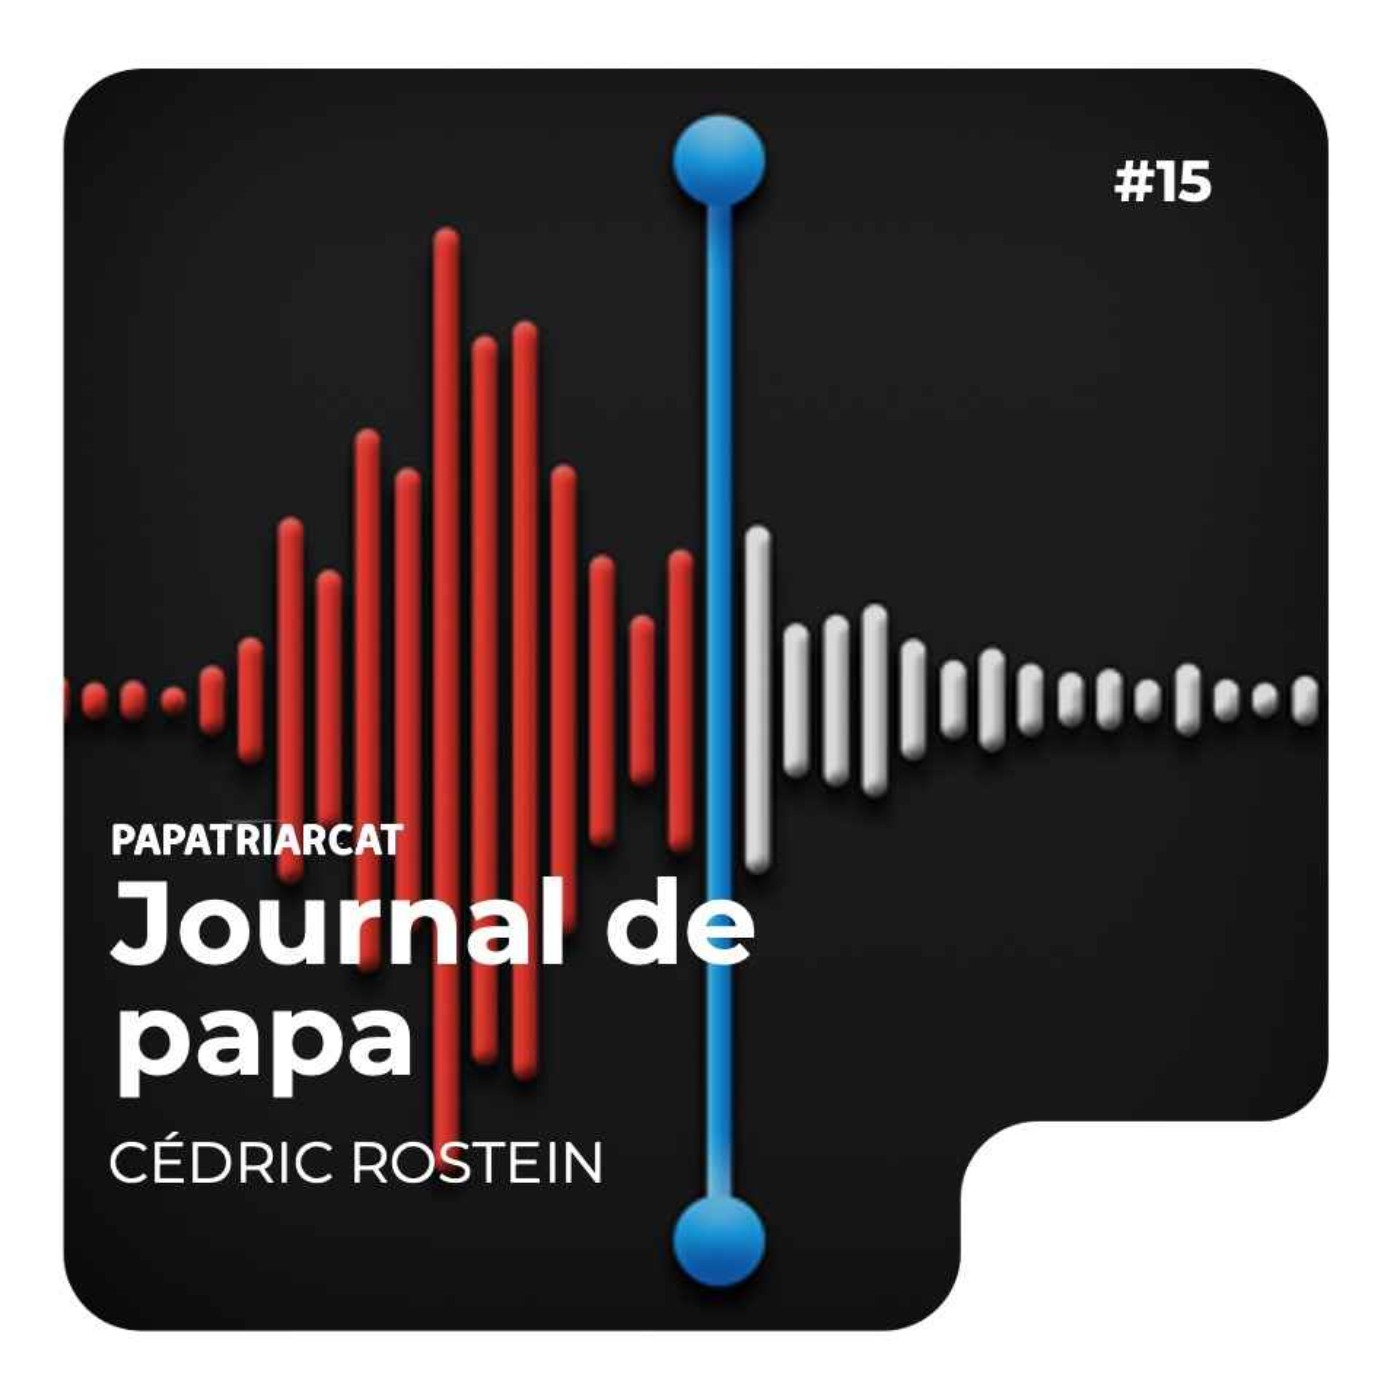 Journal de papa #15